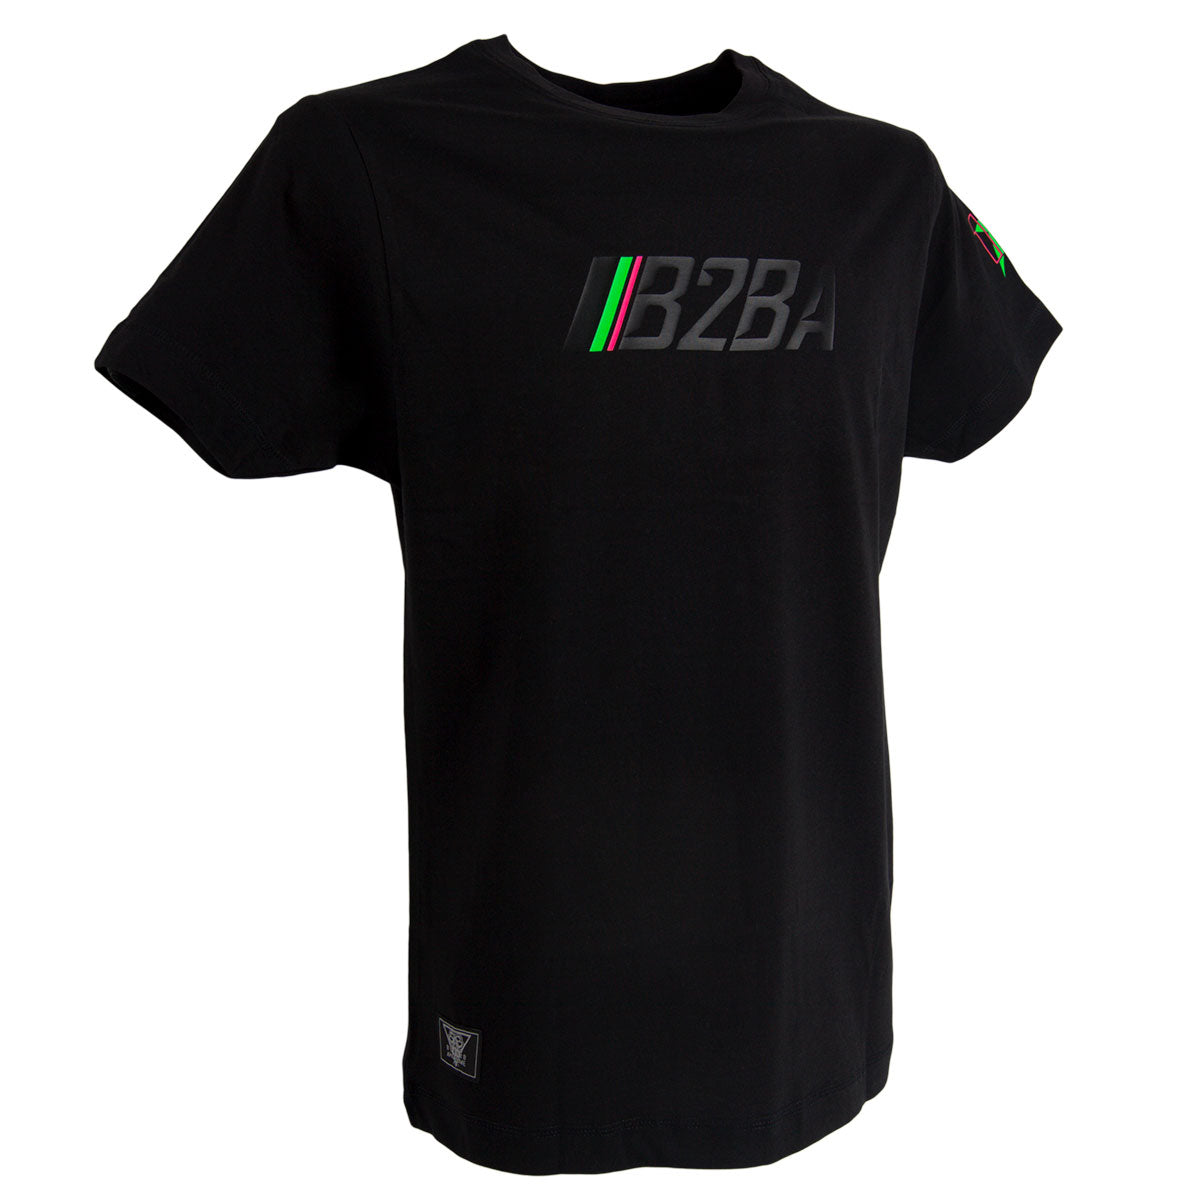 US21 T-Shirt Black - B2BA Clothing